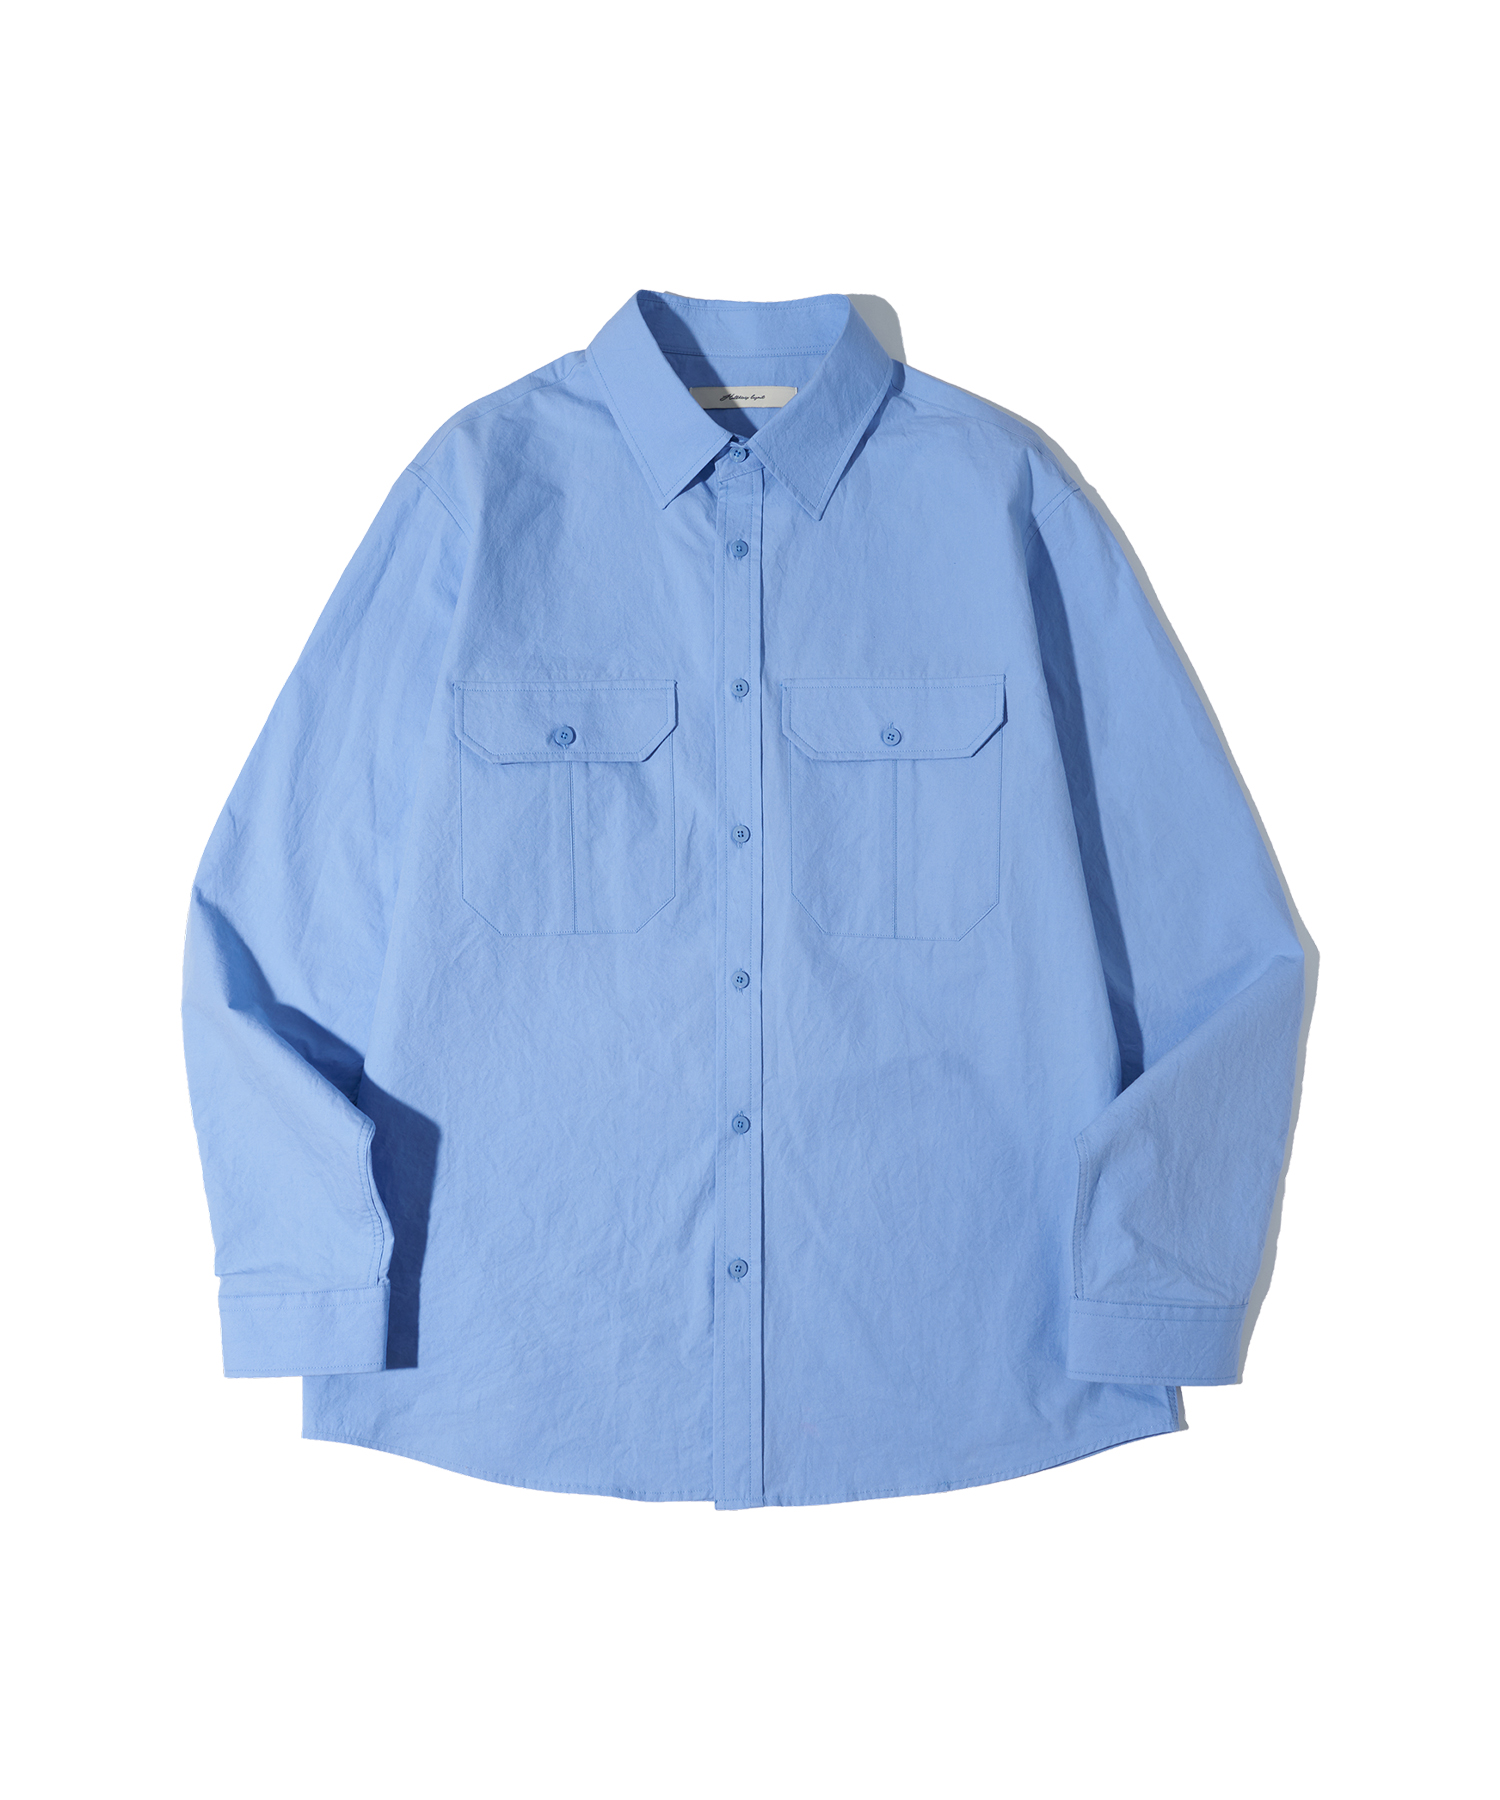 T20004 Big pocket shirt_Blue